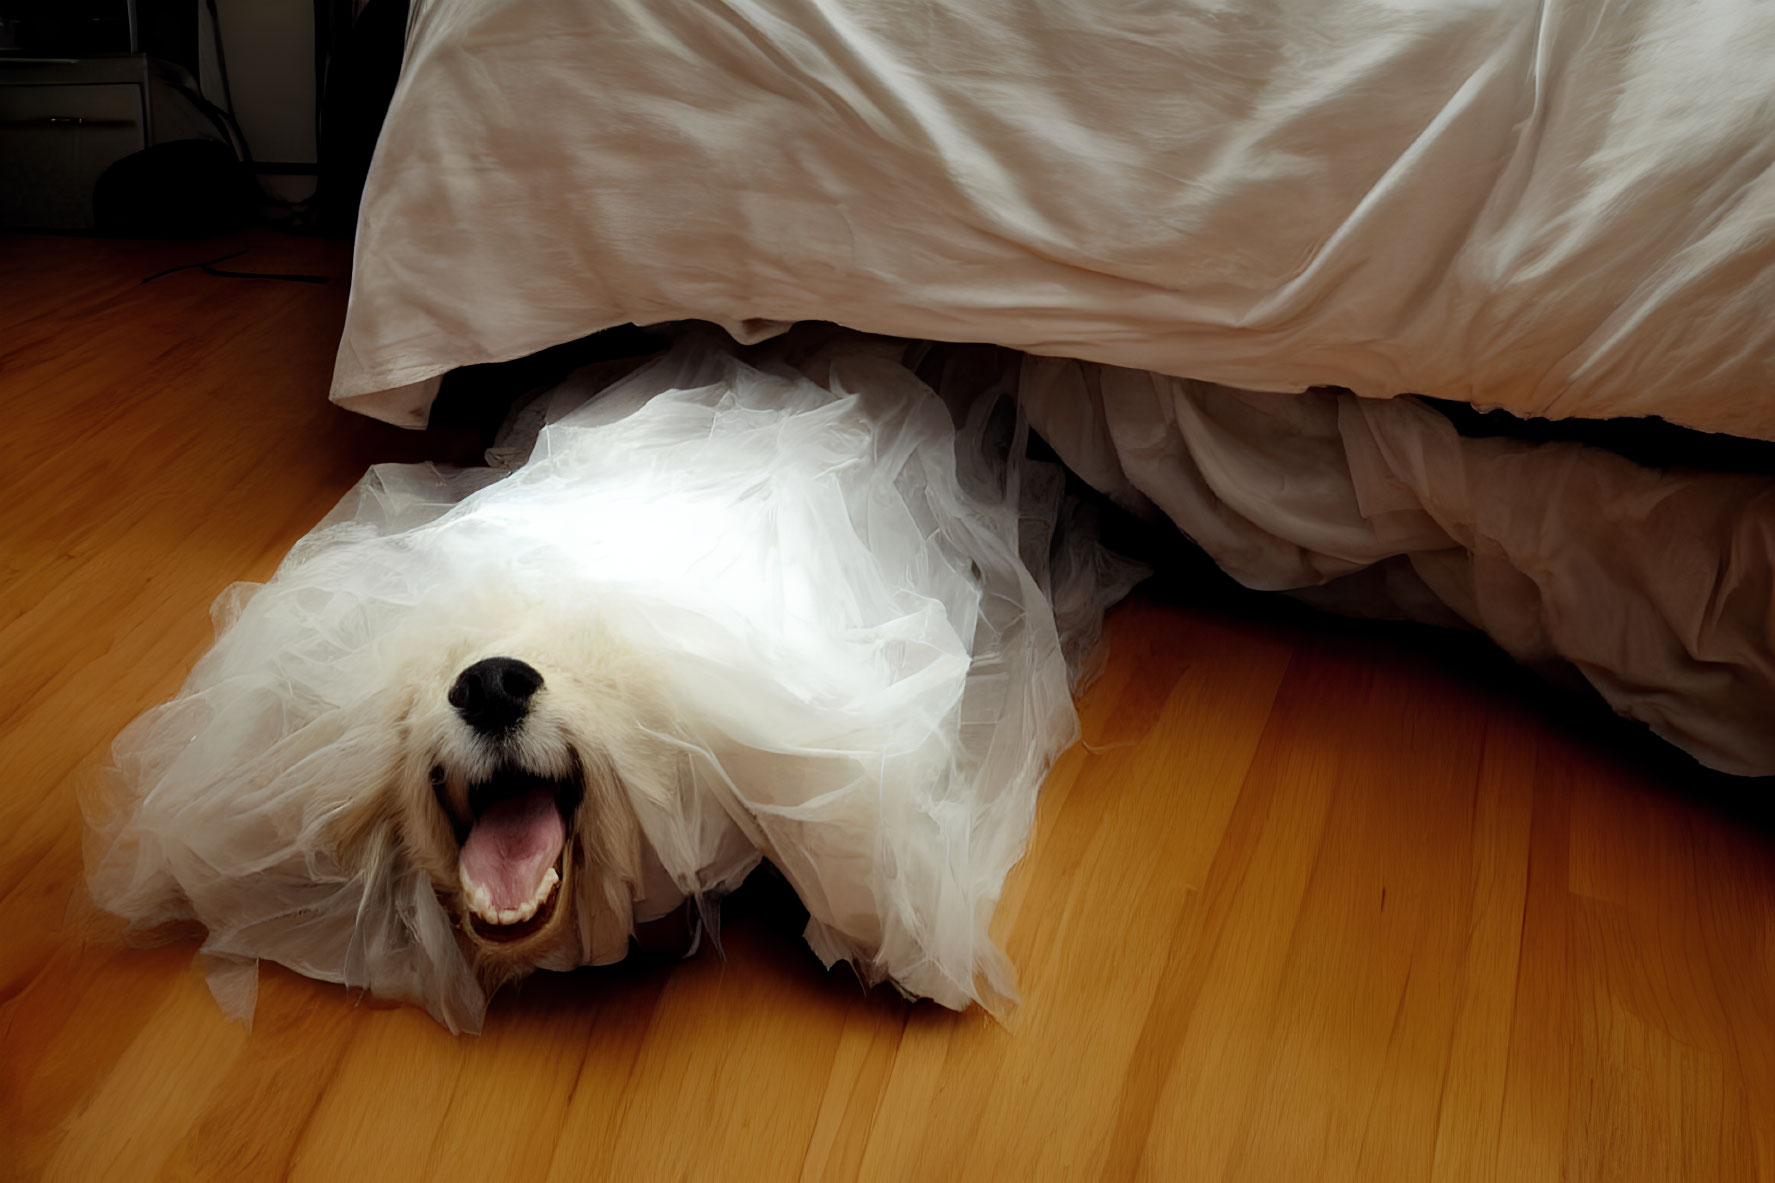 Dog peeking under bed with fabric veil on wooden floor